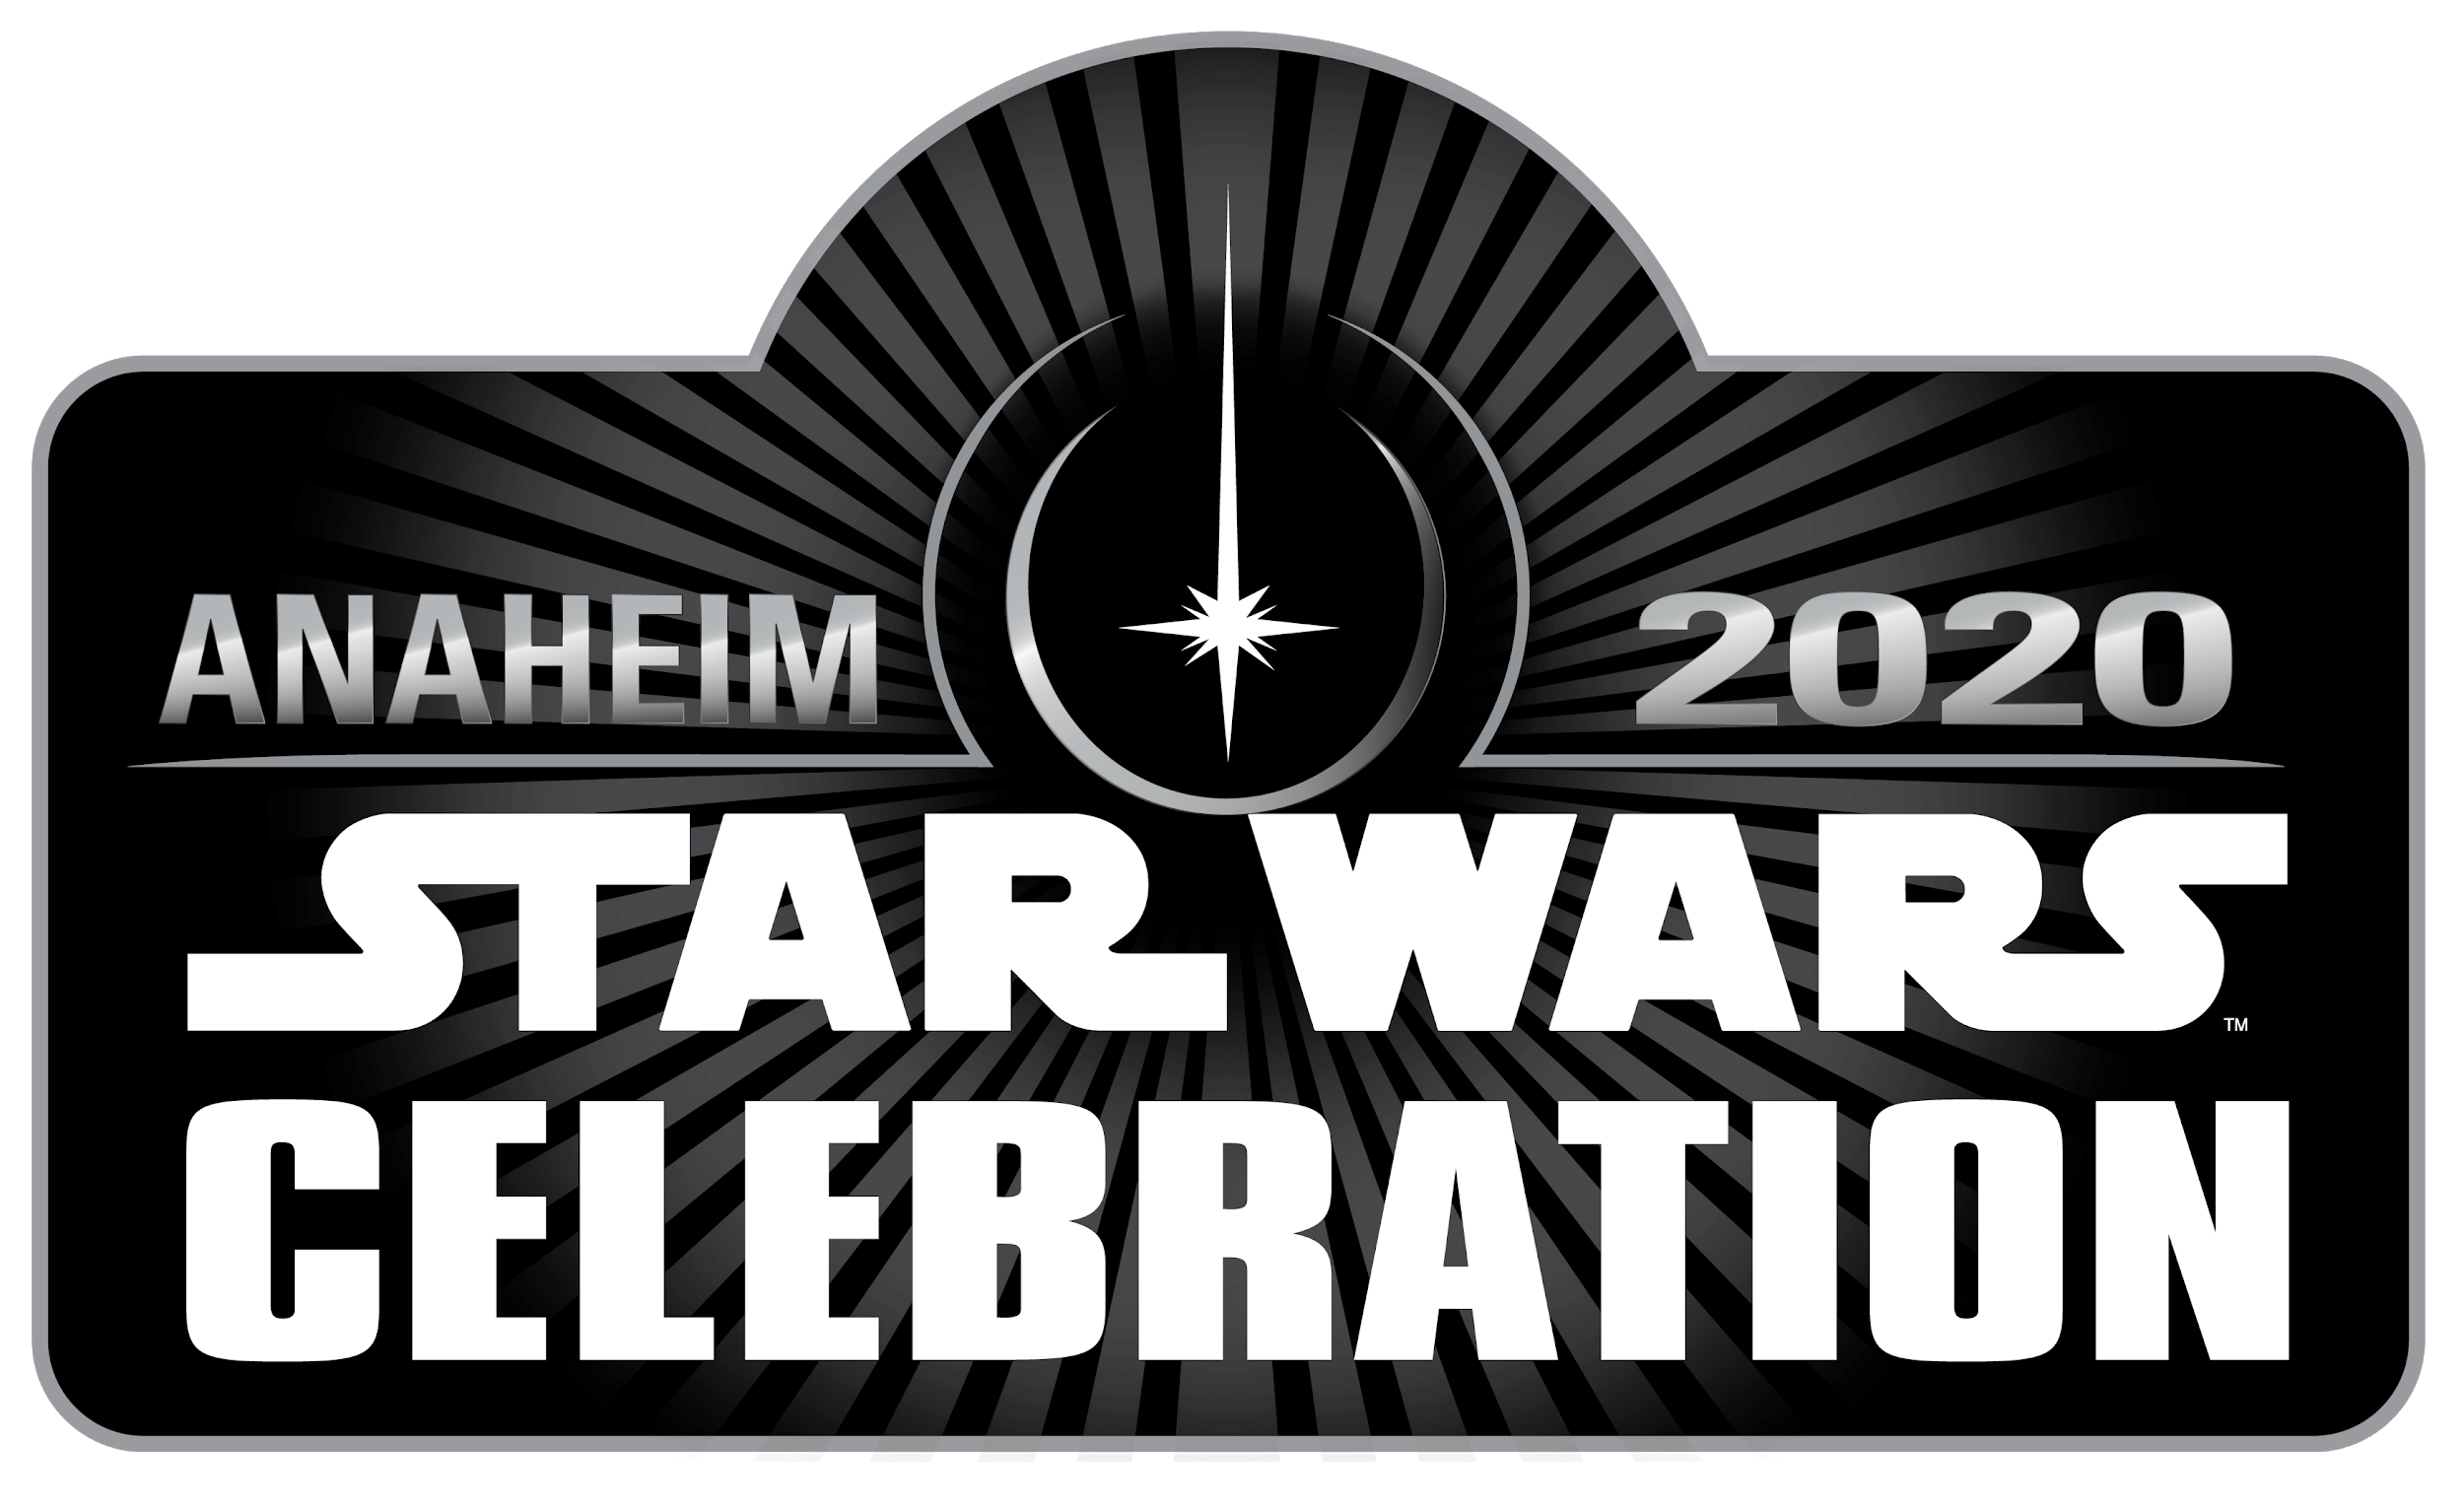 Star Wars Celebration 2020 Tickets Have Gone On Sale